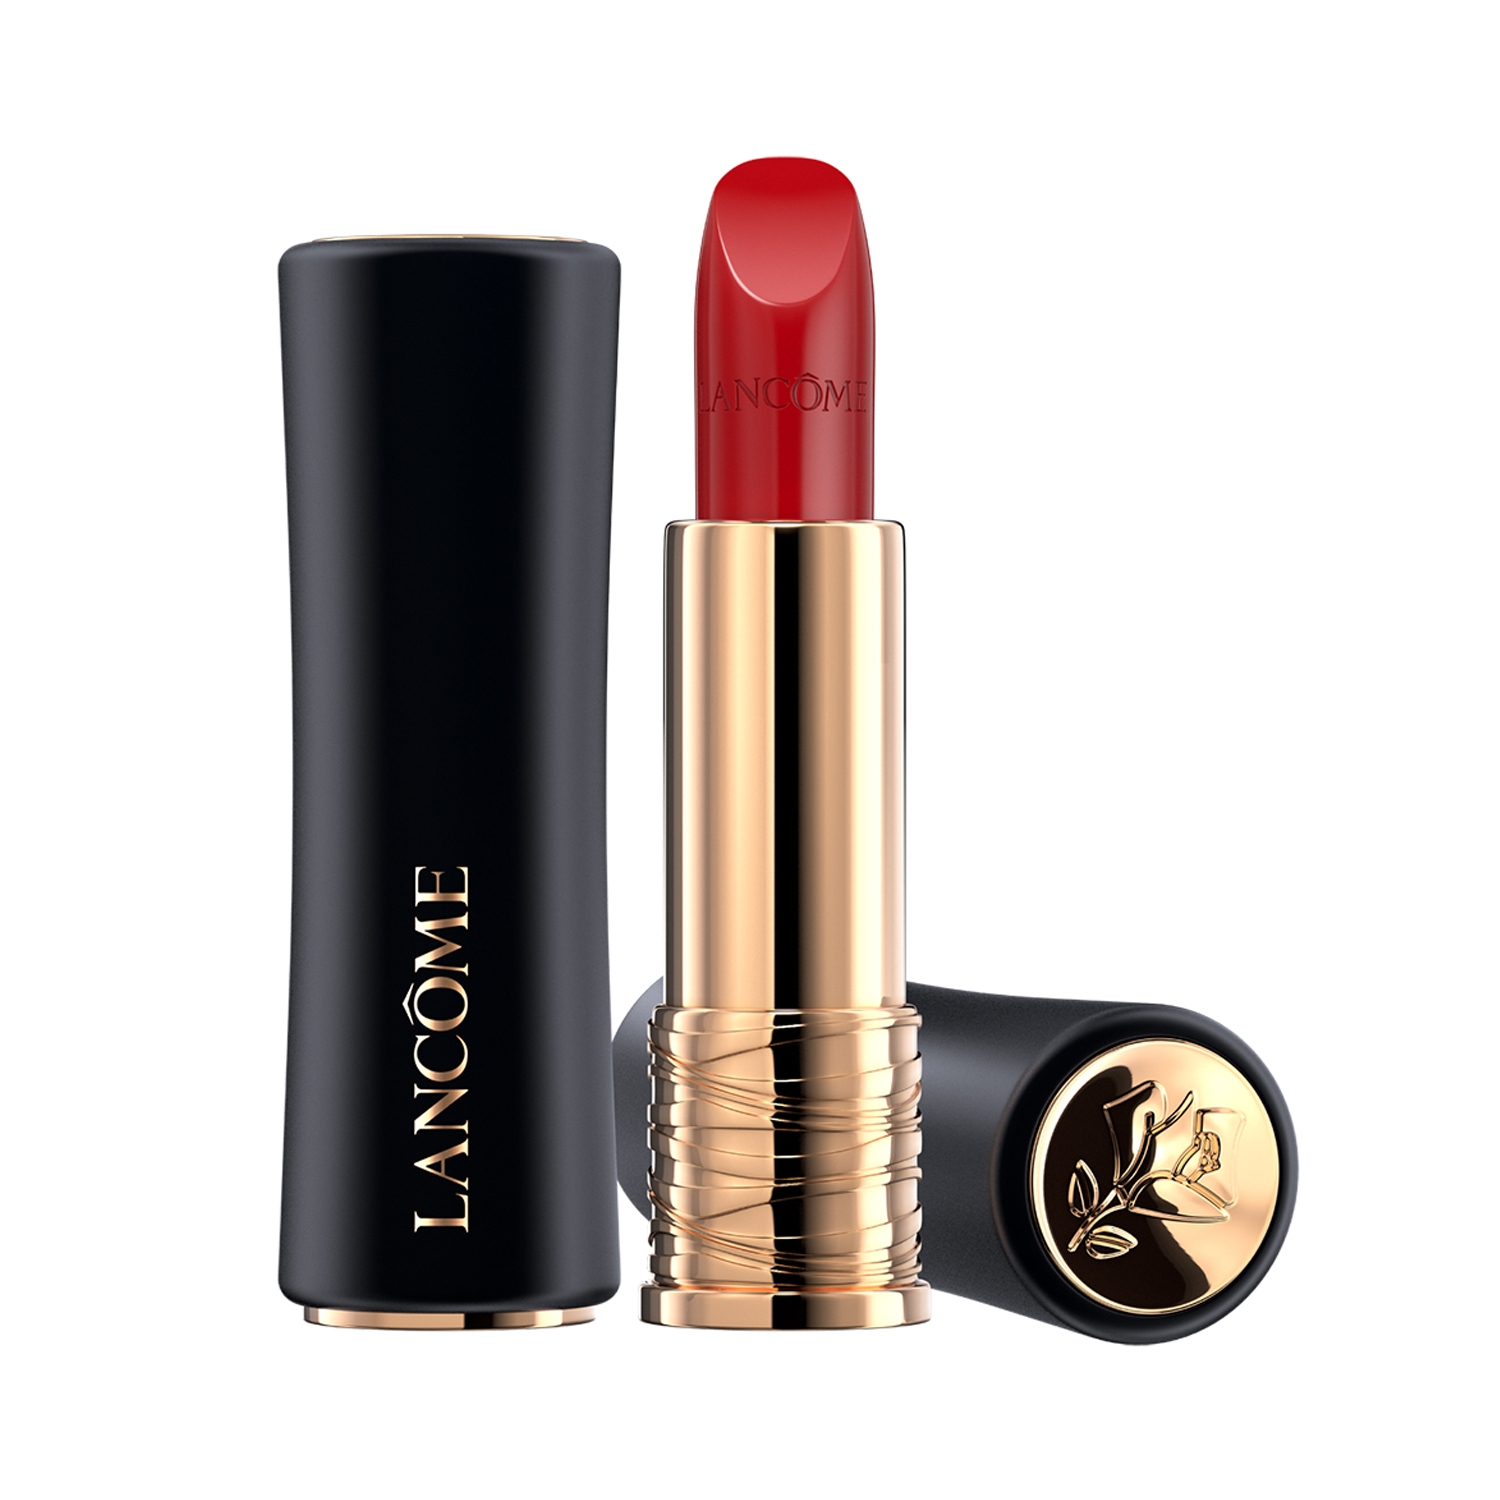 Lancome | Lancome L' Absolu Rouge Cream Lipstick - 148 Bisou Bisou (3.4g)